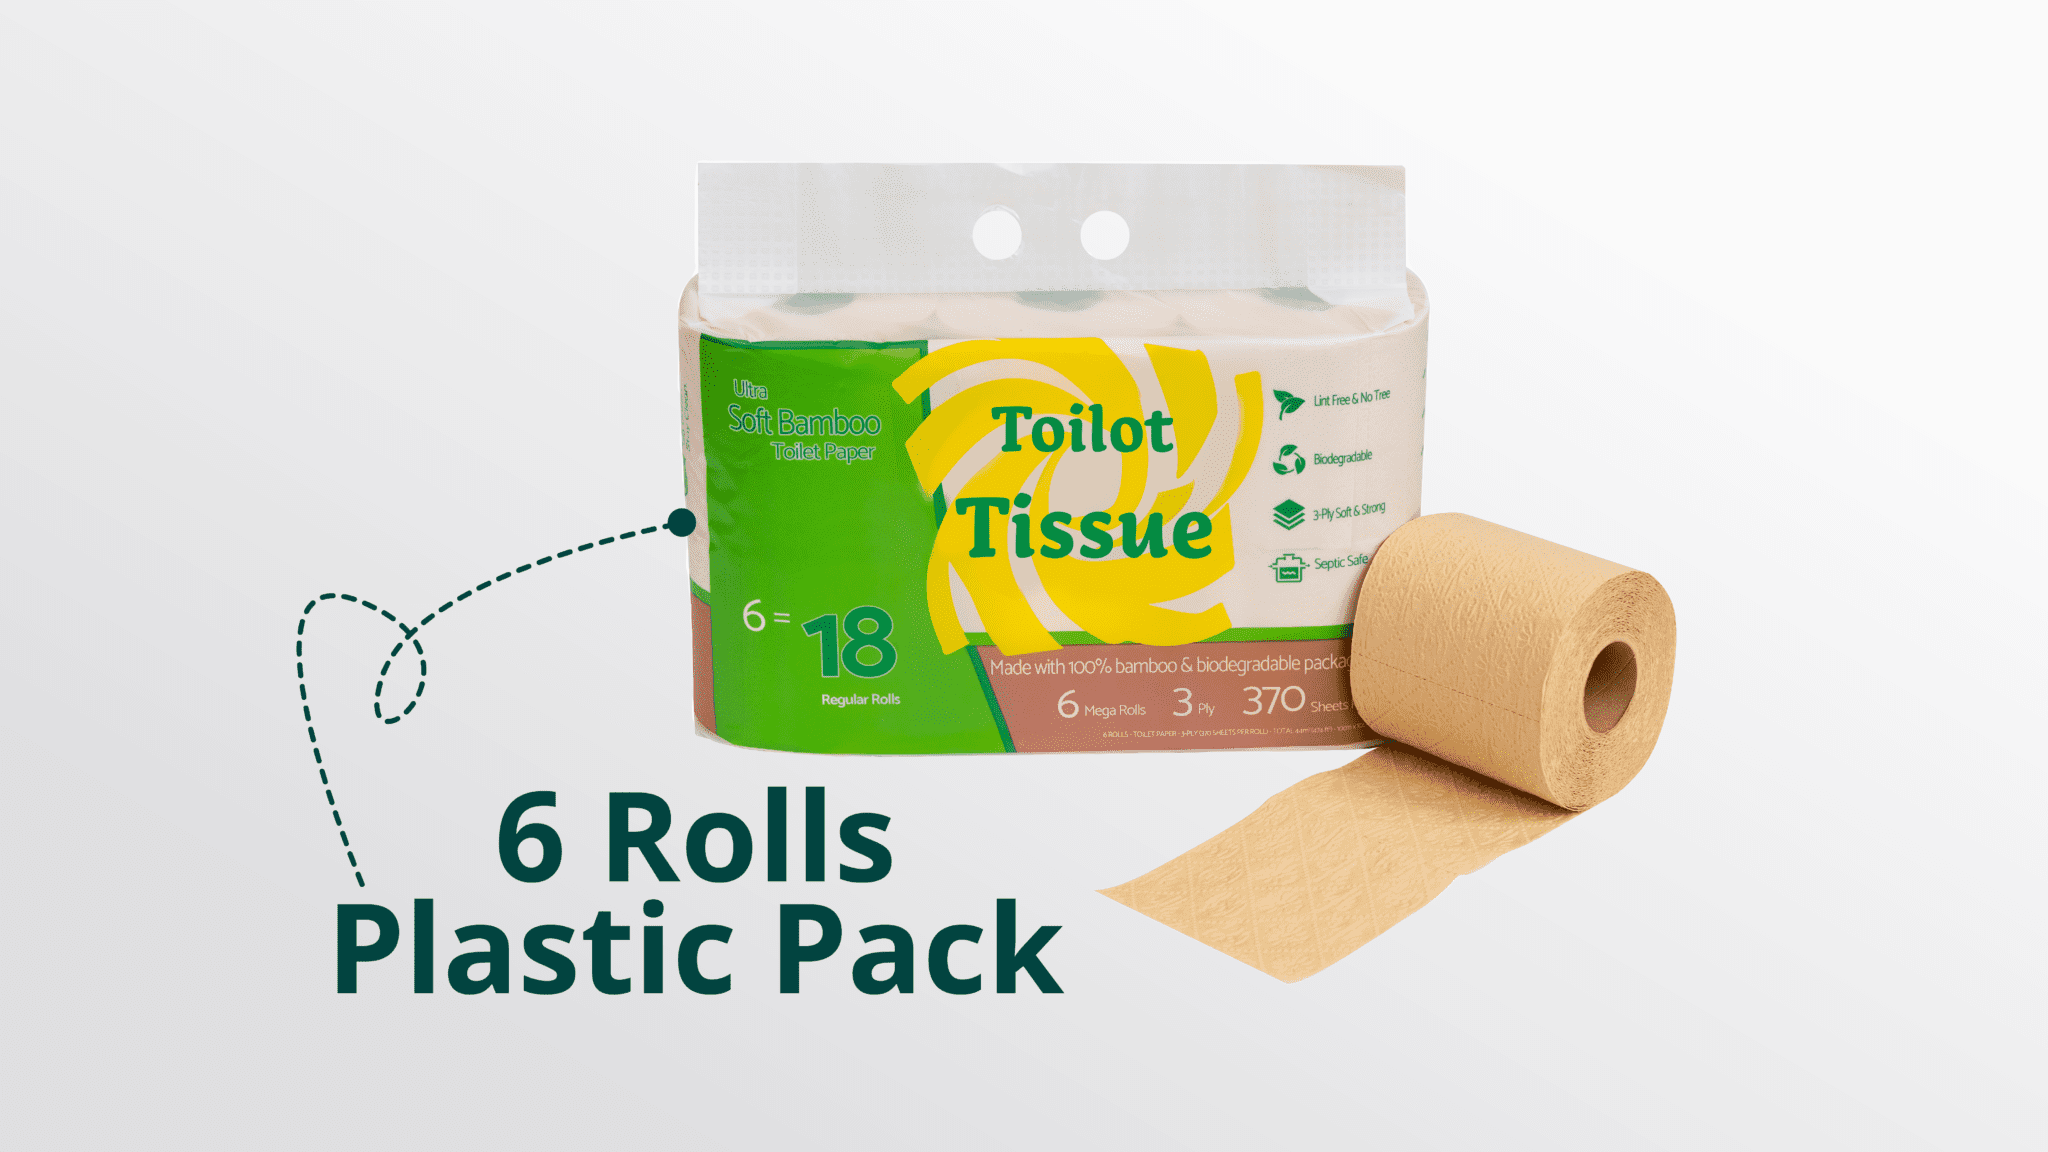 6 rolls plastic pack toilet paper